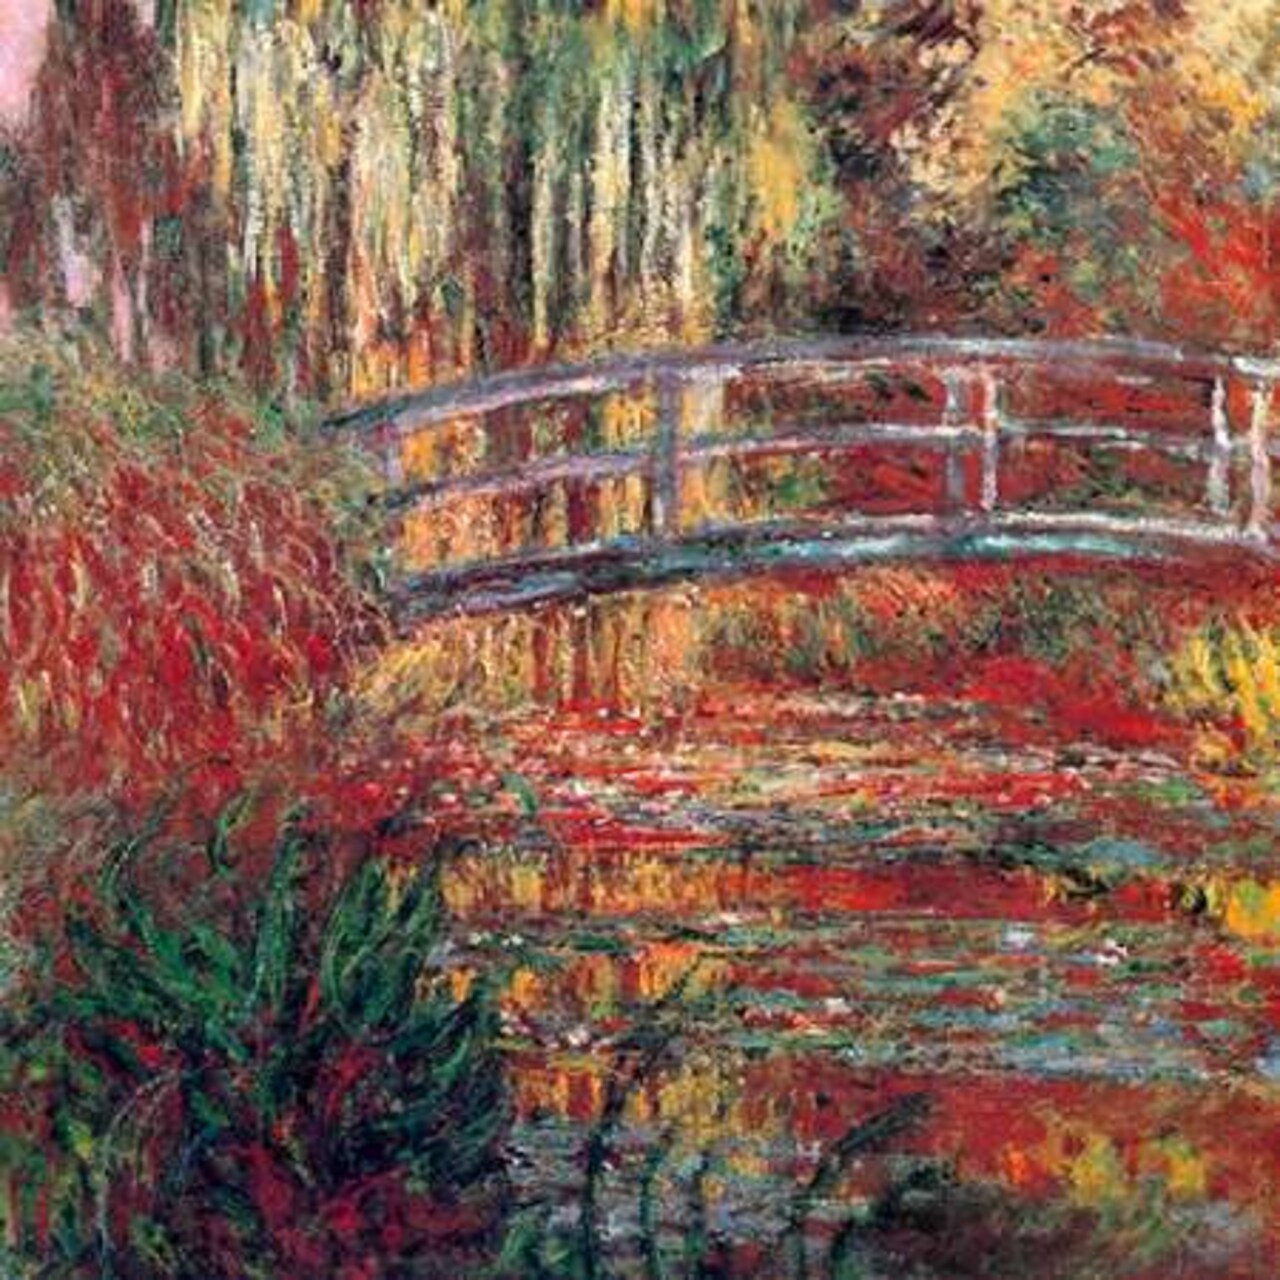 Water Garden And Japanese Footbridge 1900 Poster Print by Claude Monet - Item # VARPDX373861